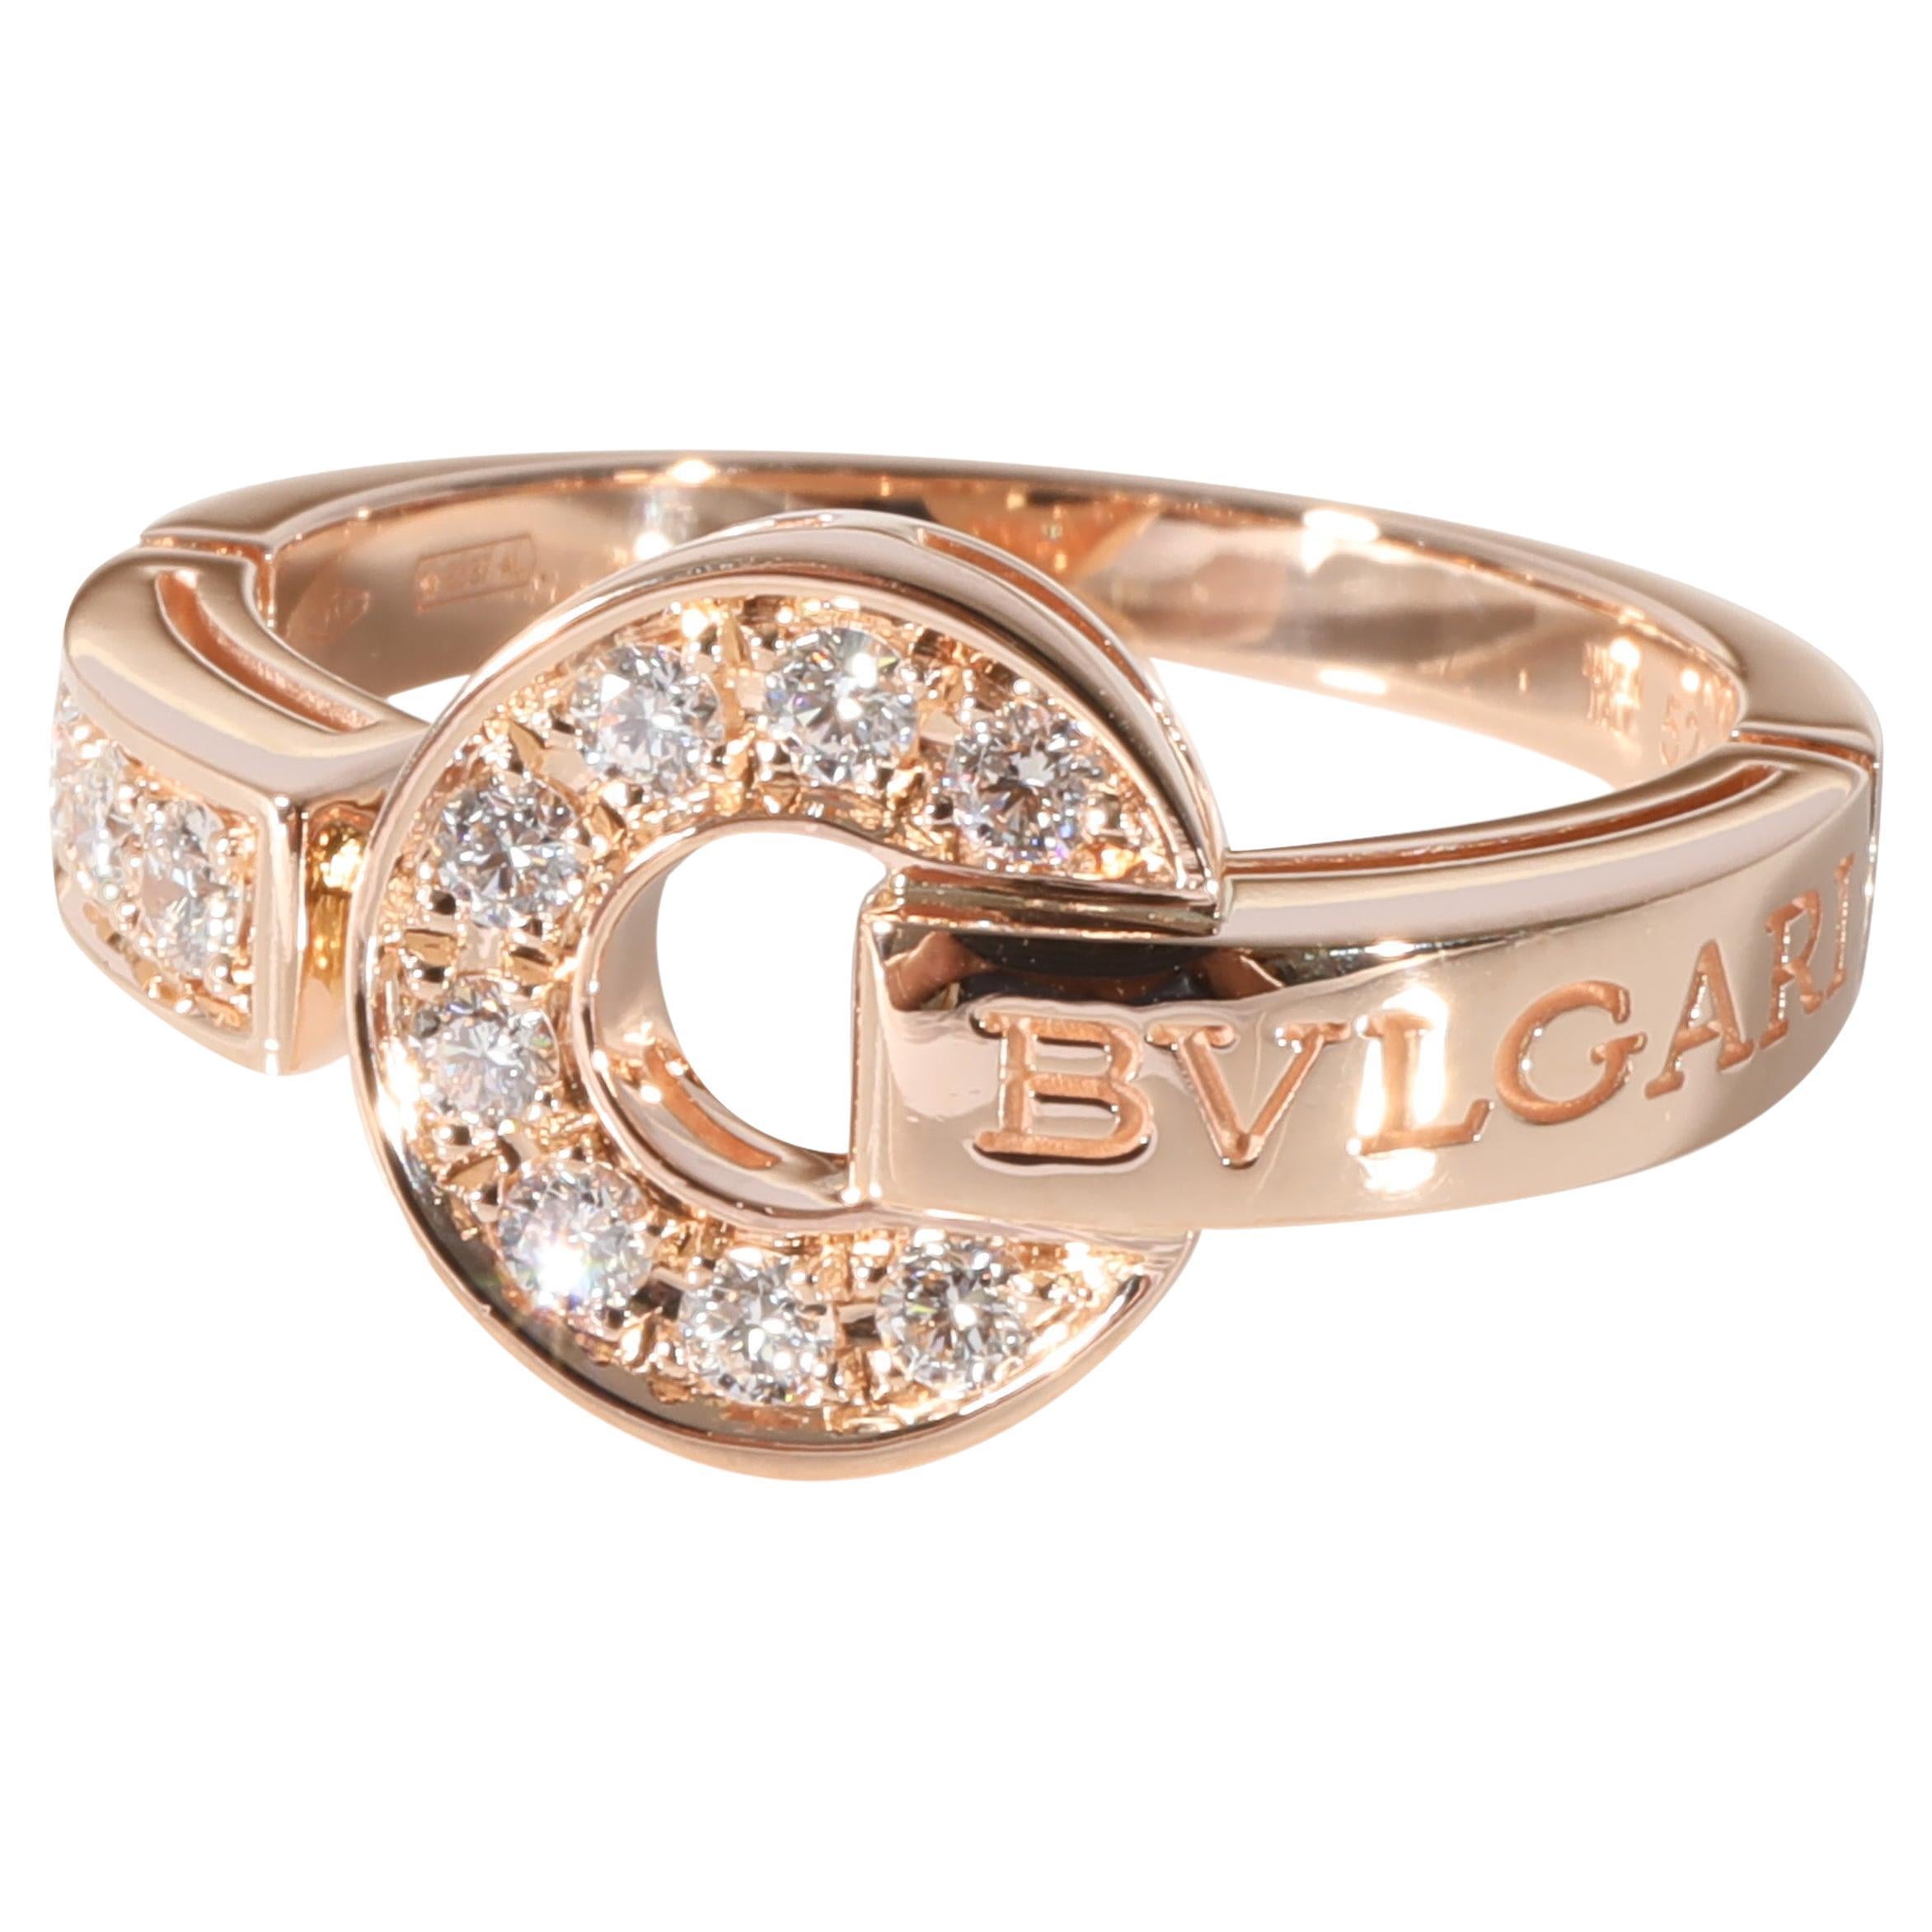 Bvlgari Bvlgari Bvlgari Diamond Ring in 18k Rose Gold 0.28 CTW For Sale